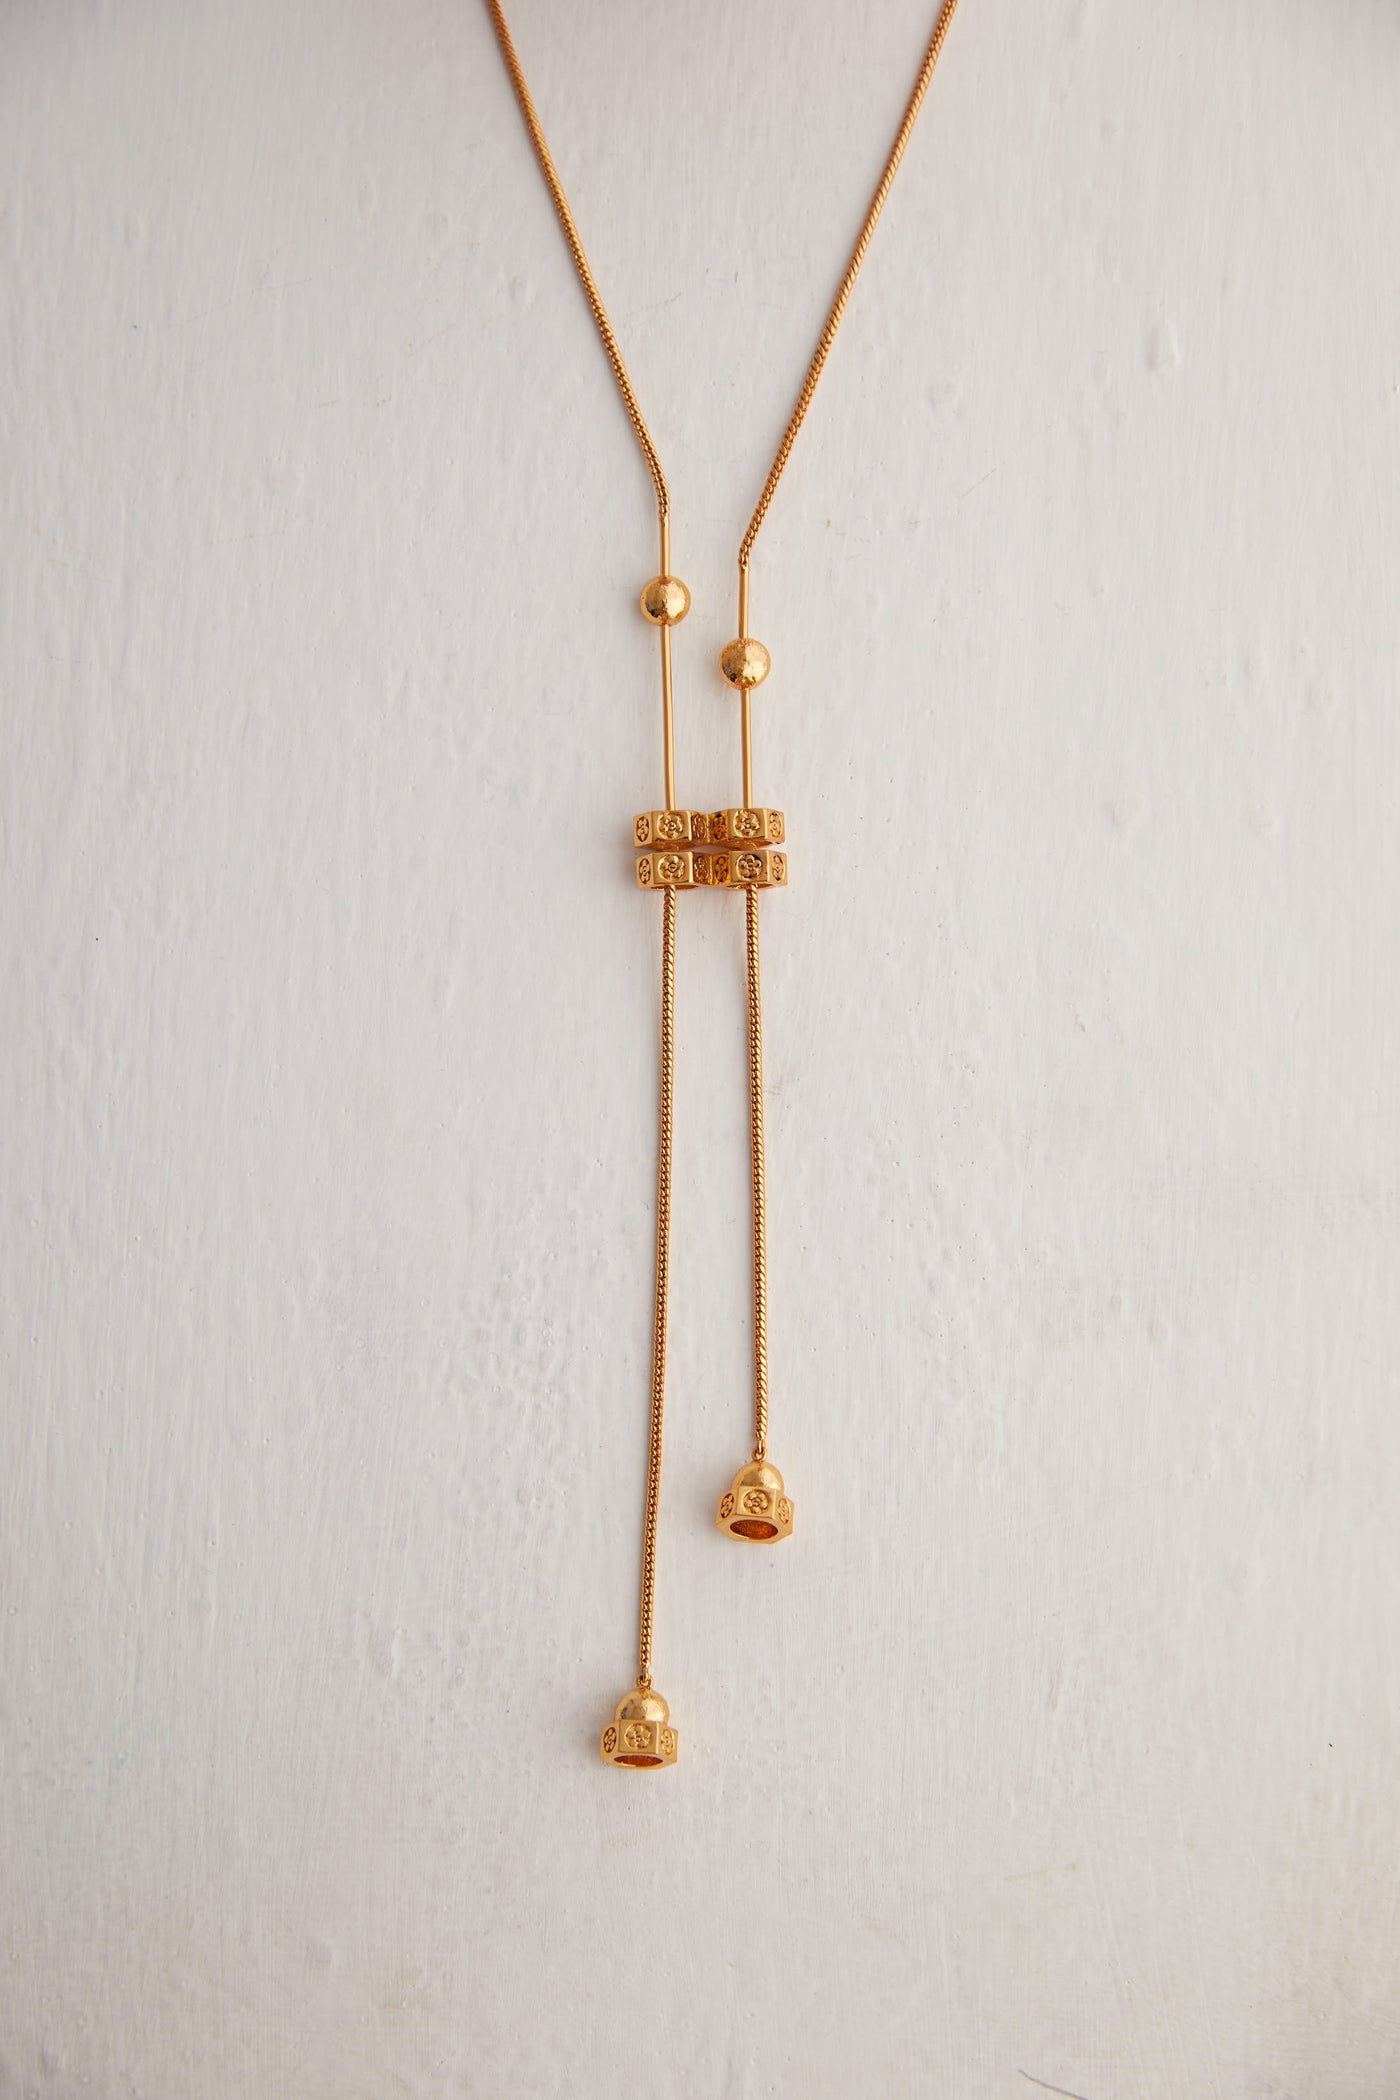 Outhouse jewellery OH Poppi Quatro Necklace gold online shopping melange singapore indian designer wear